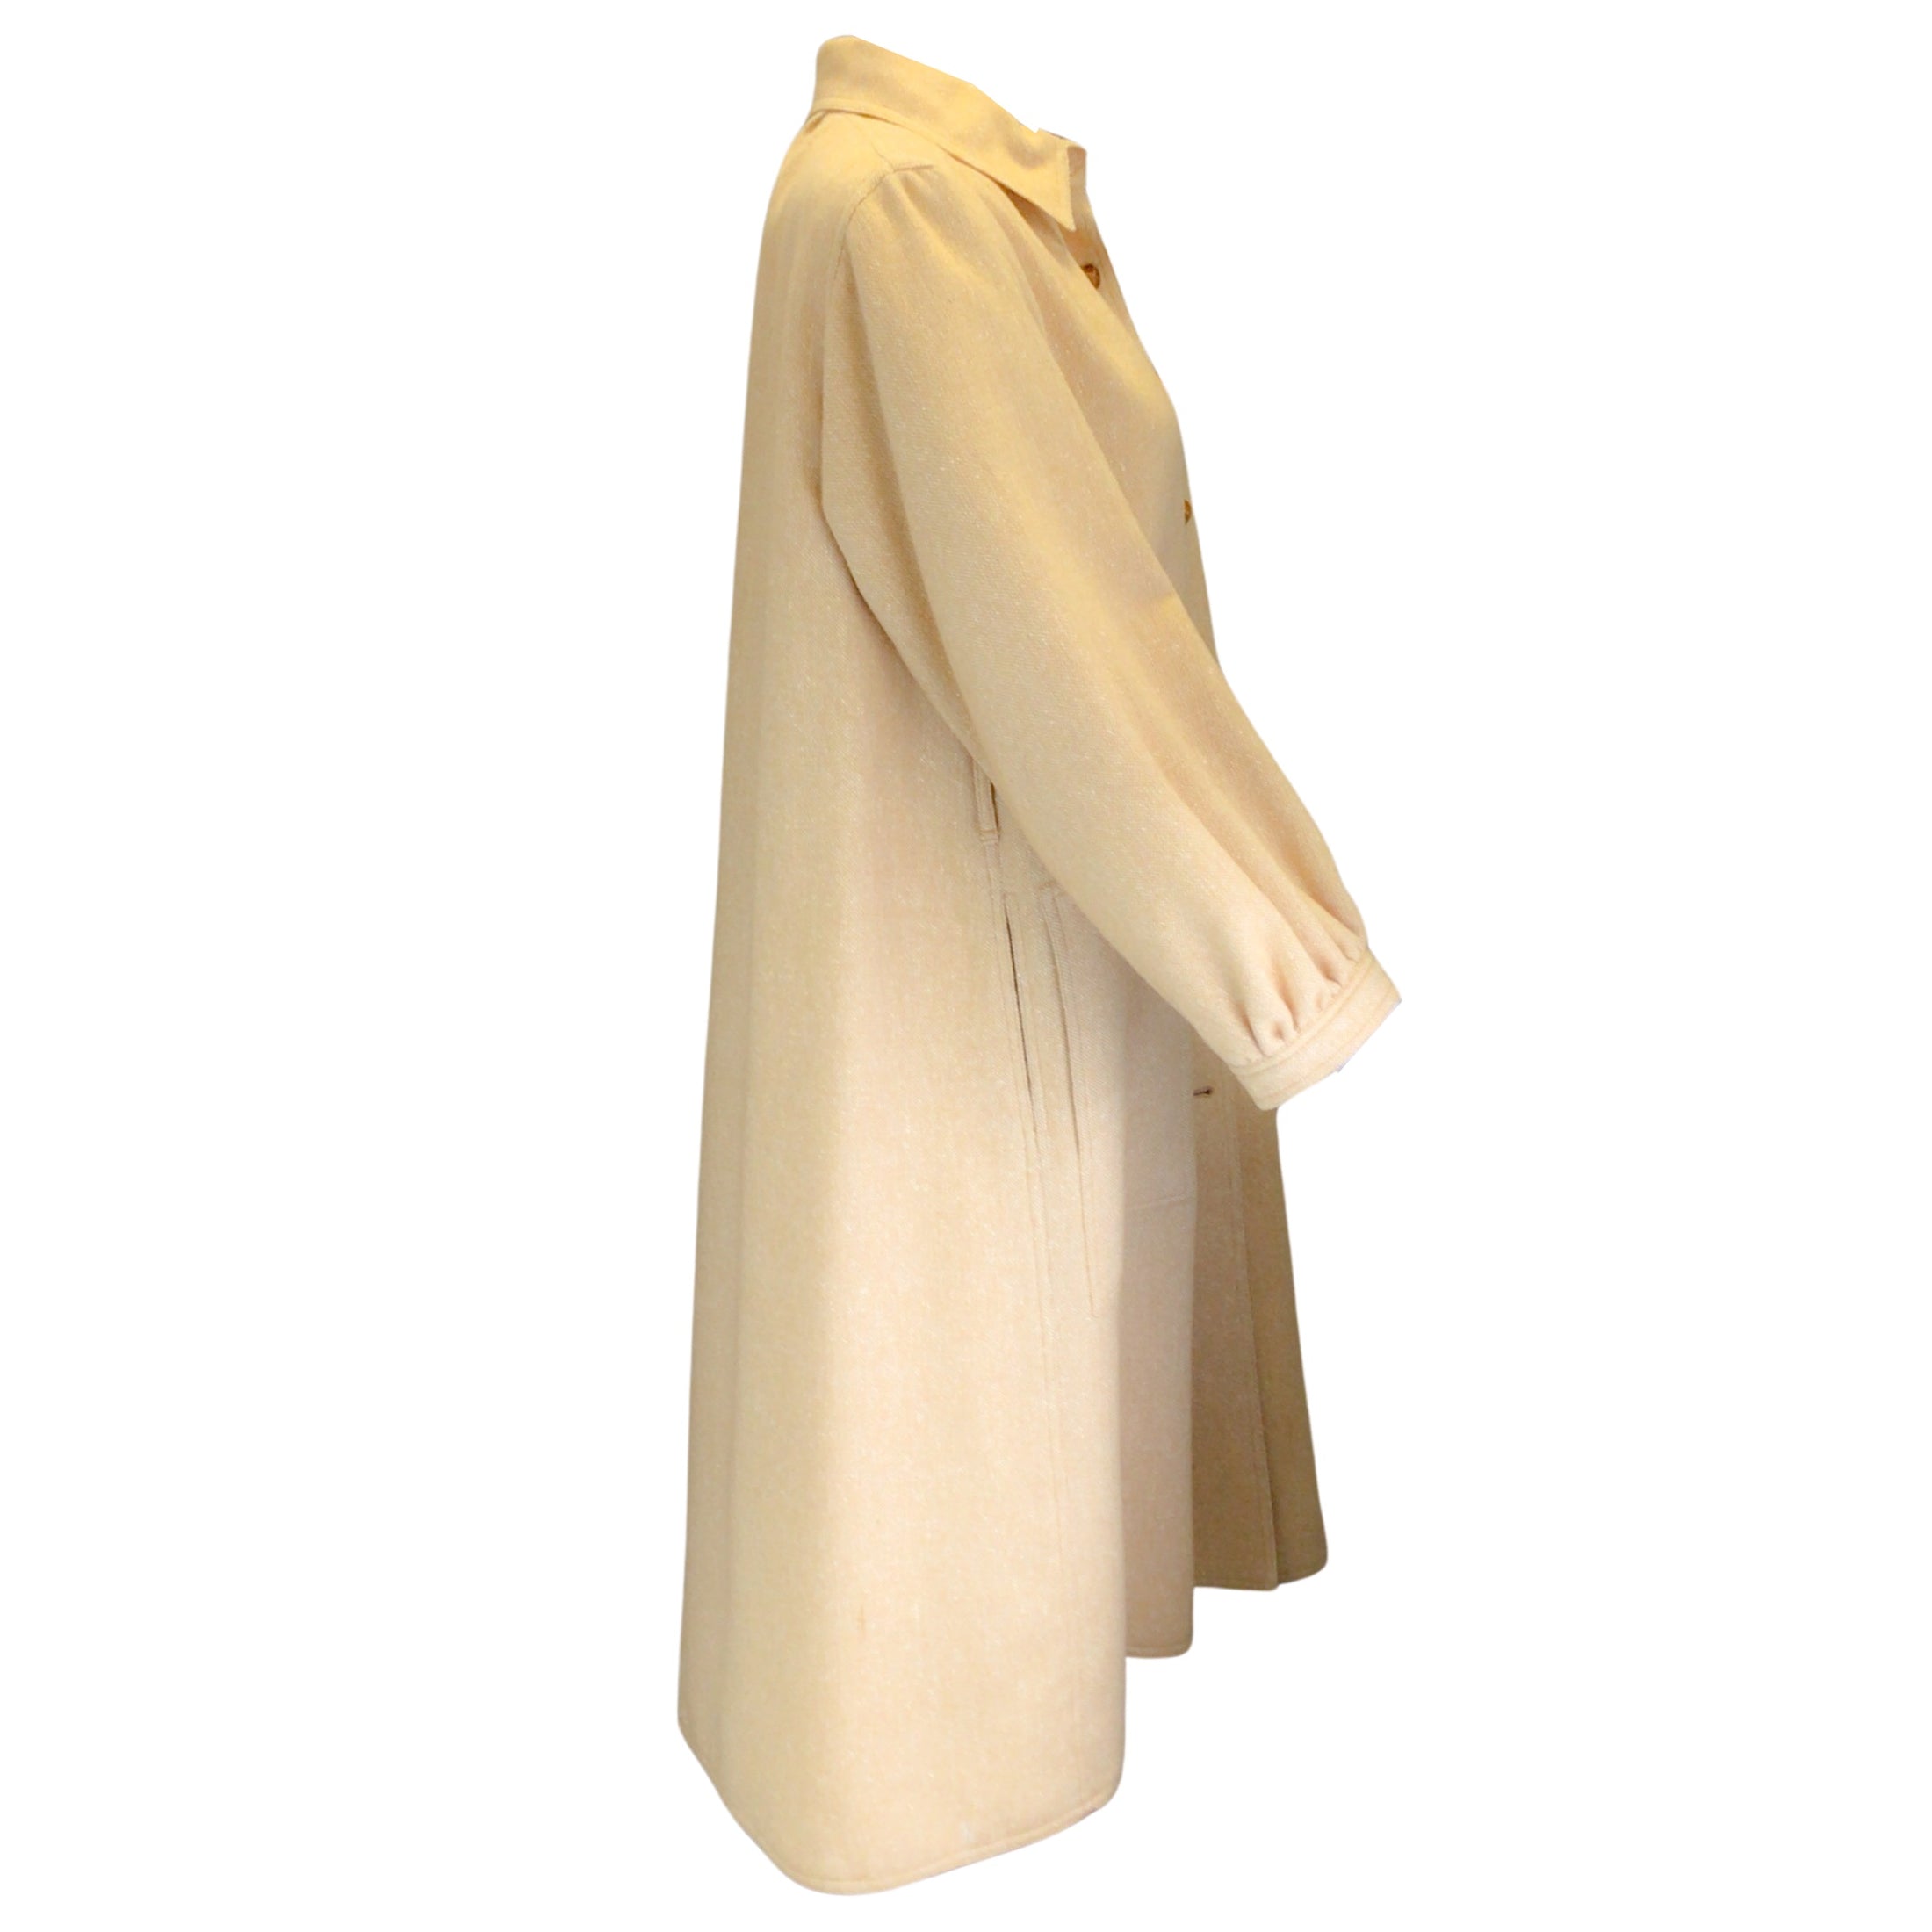 Courreges Vintage Beige Mid-Length Wool Coat